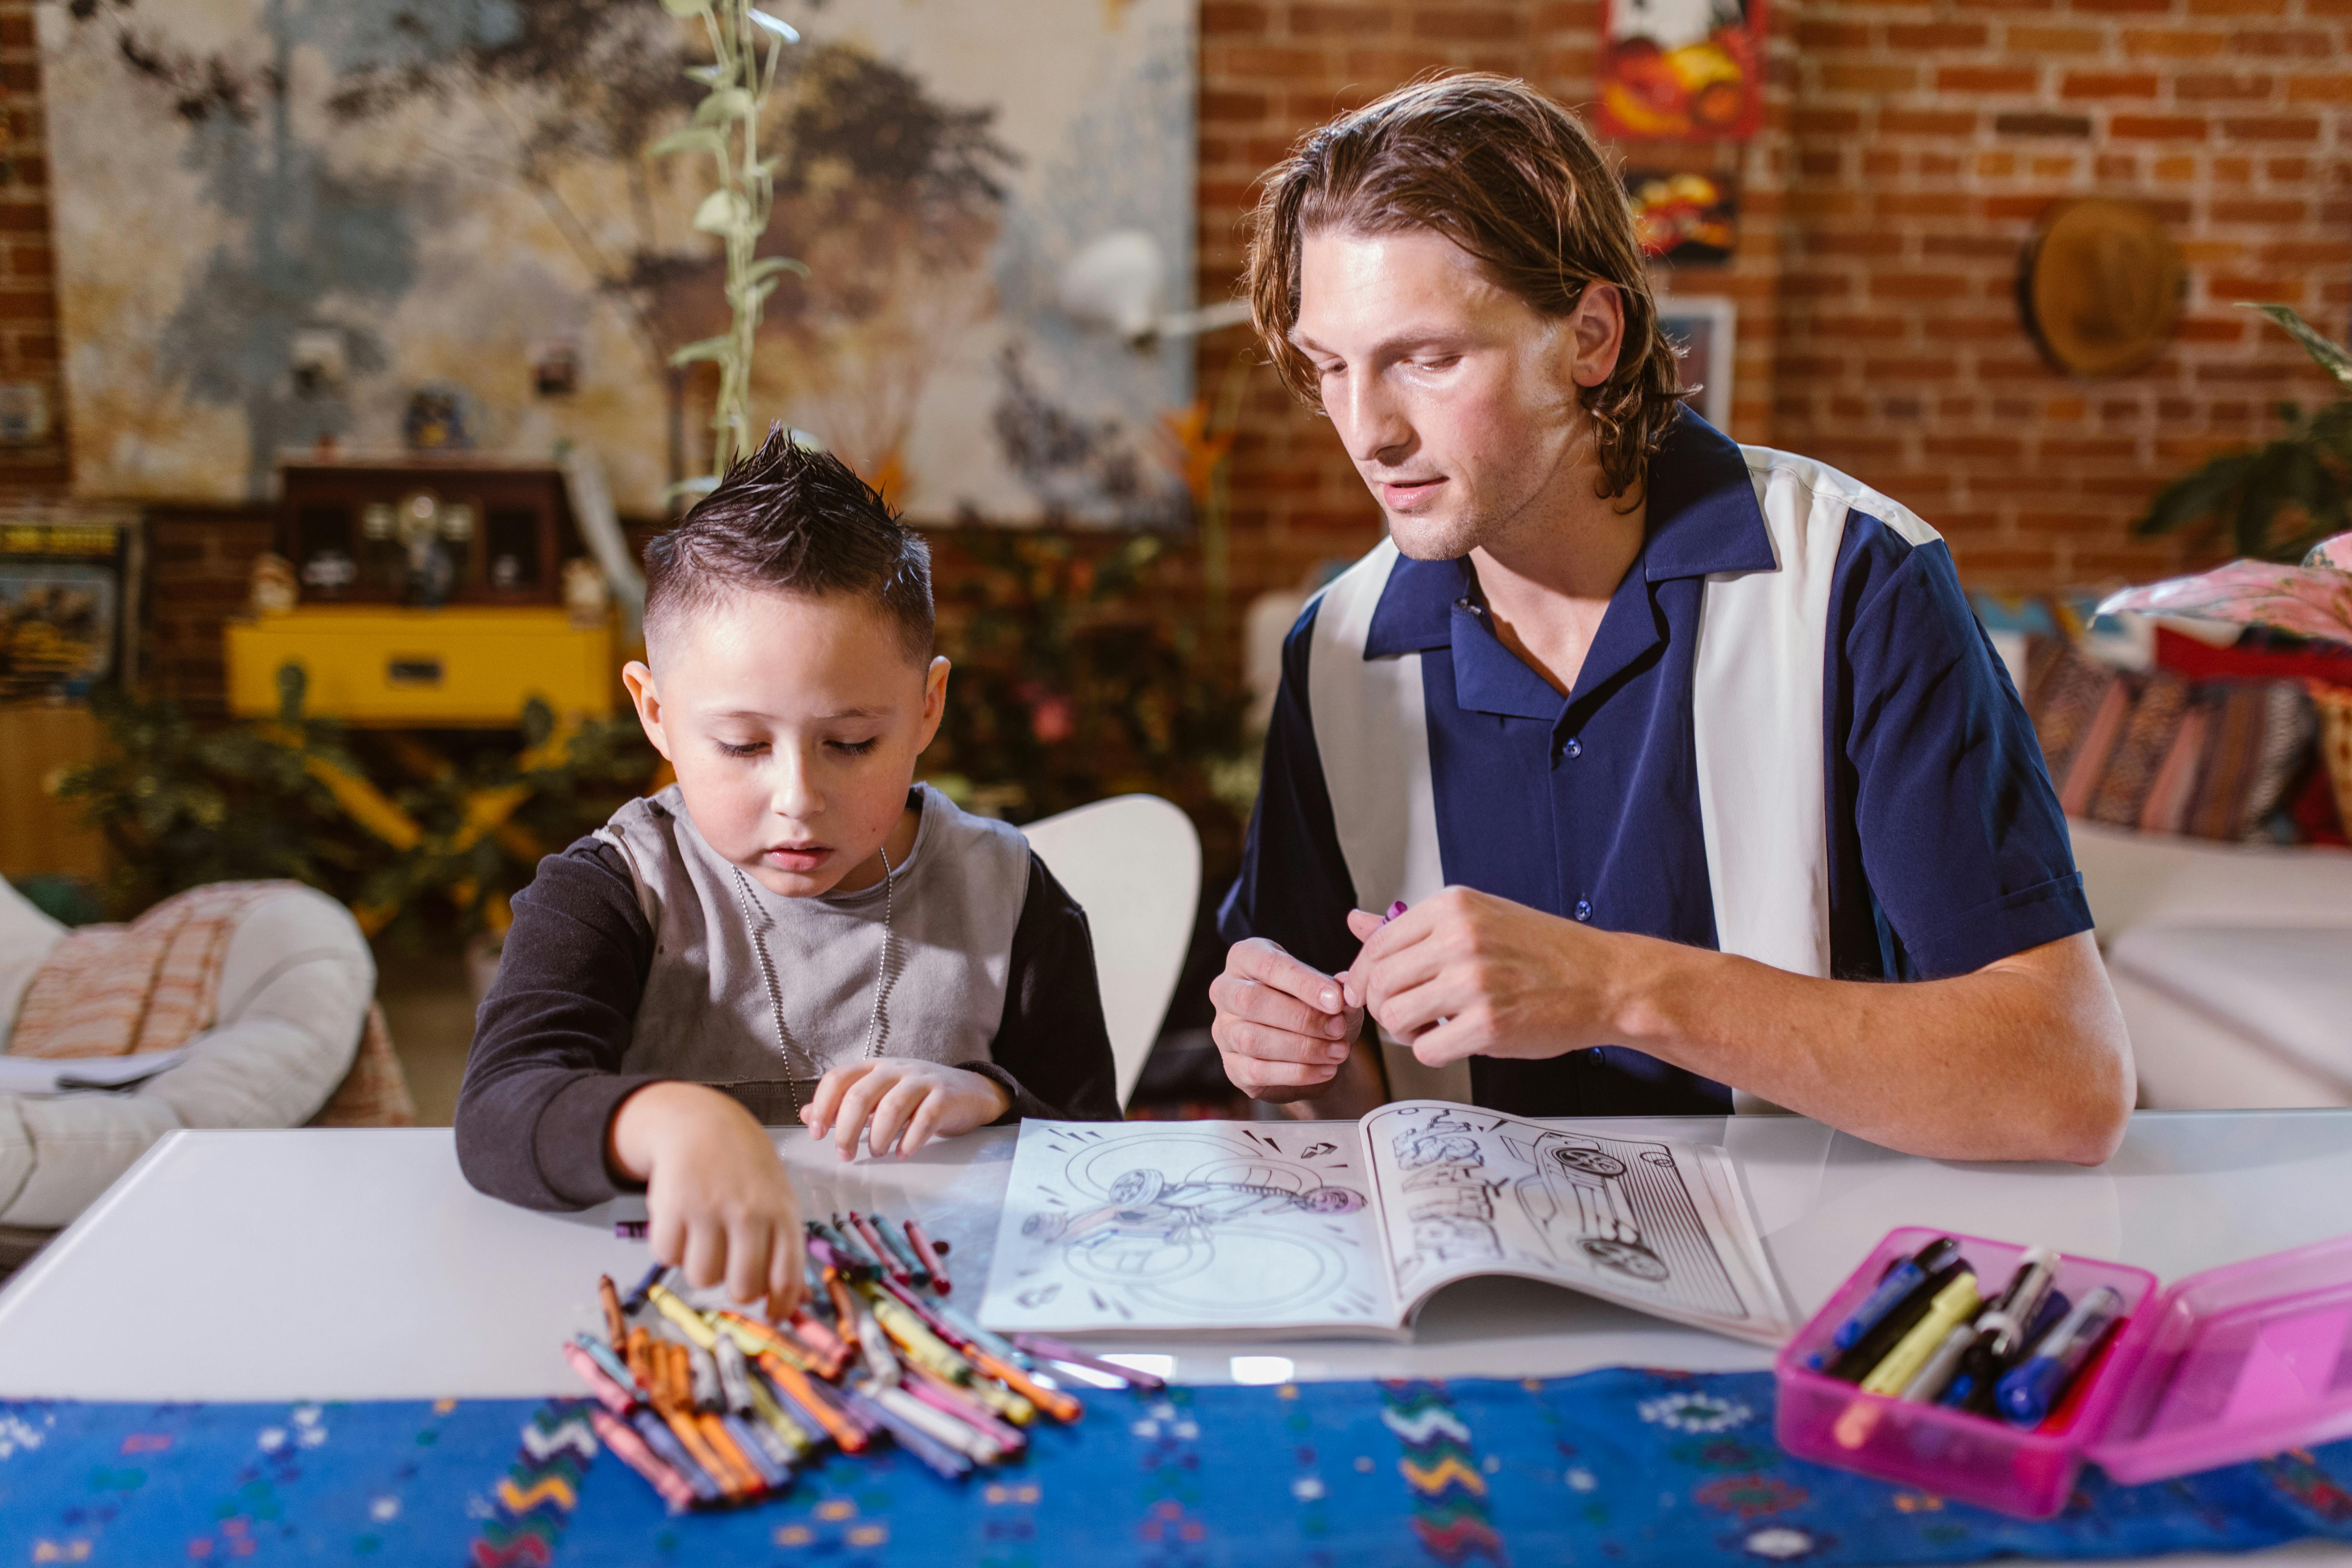 Kids Painting Stock Illustrations – 46,306 Kids Painting Stock